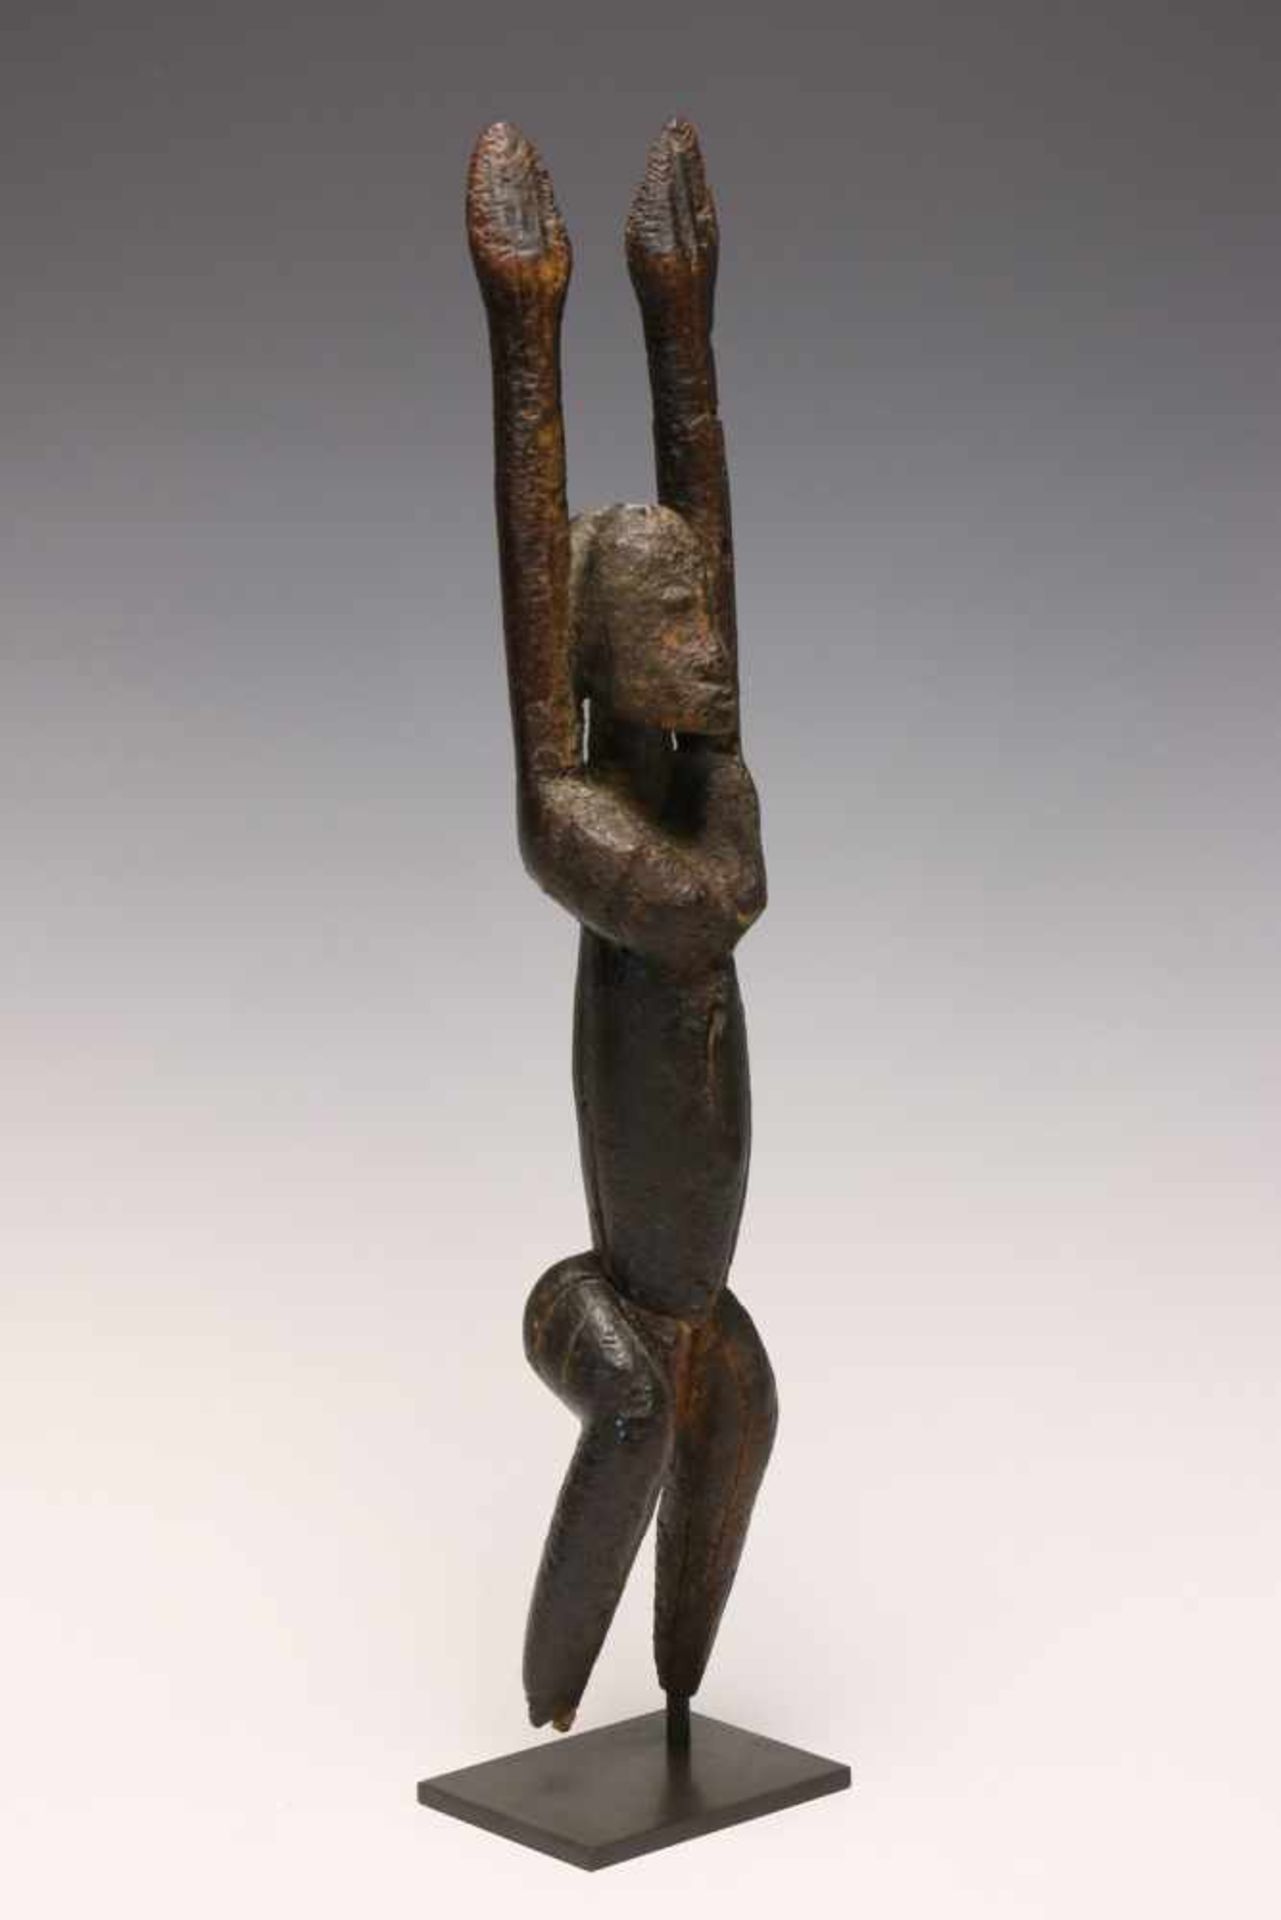 Dogon, standing antropomorphic figure,with raised arms and dark oily patina. Provenance, Steven de - Bild 6 aus 6